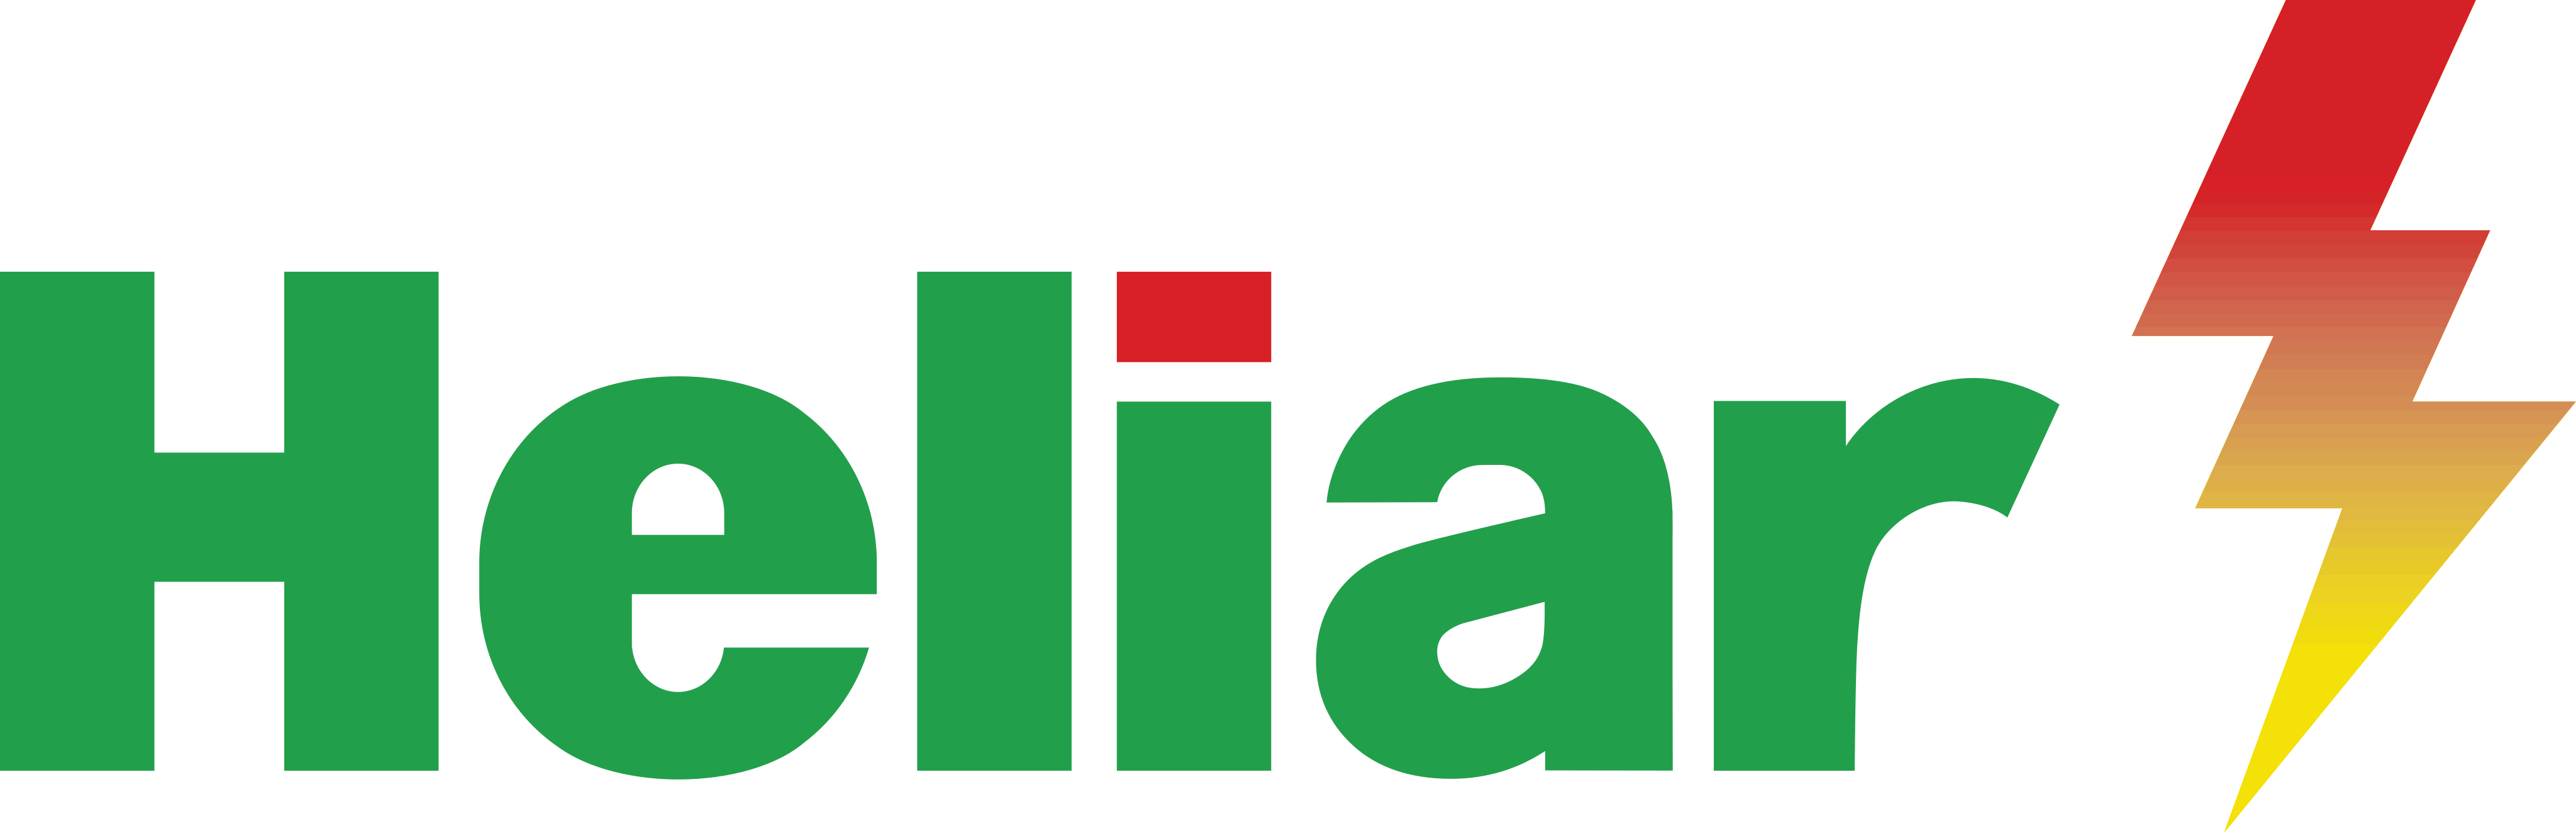 heliar-logo.png